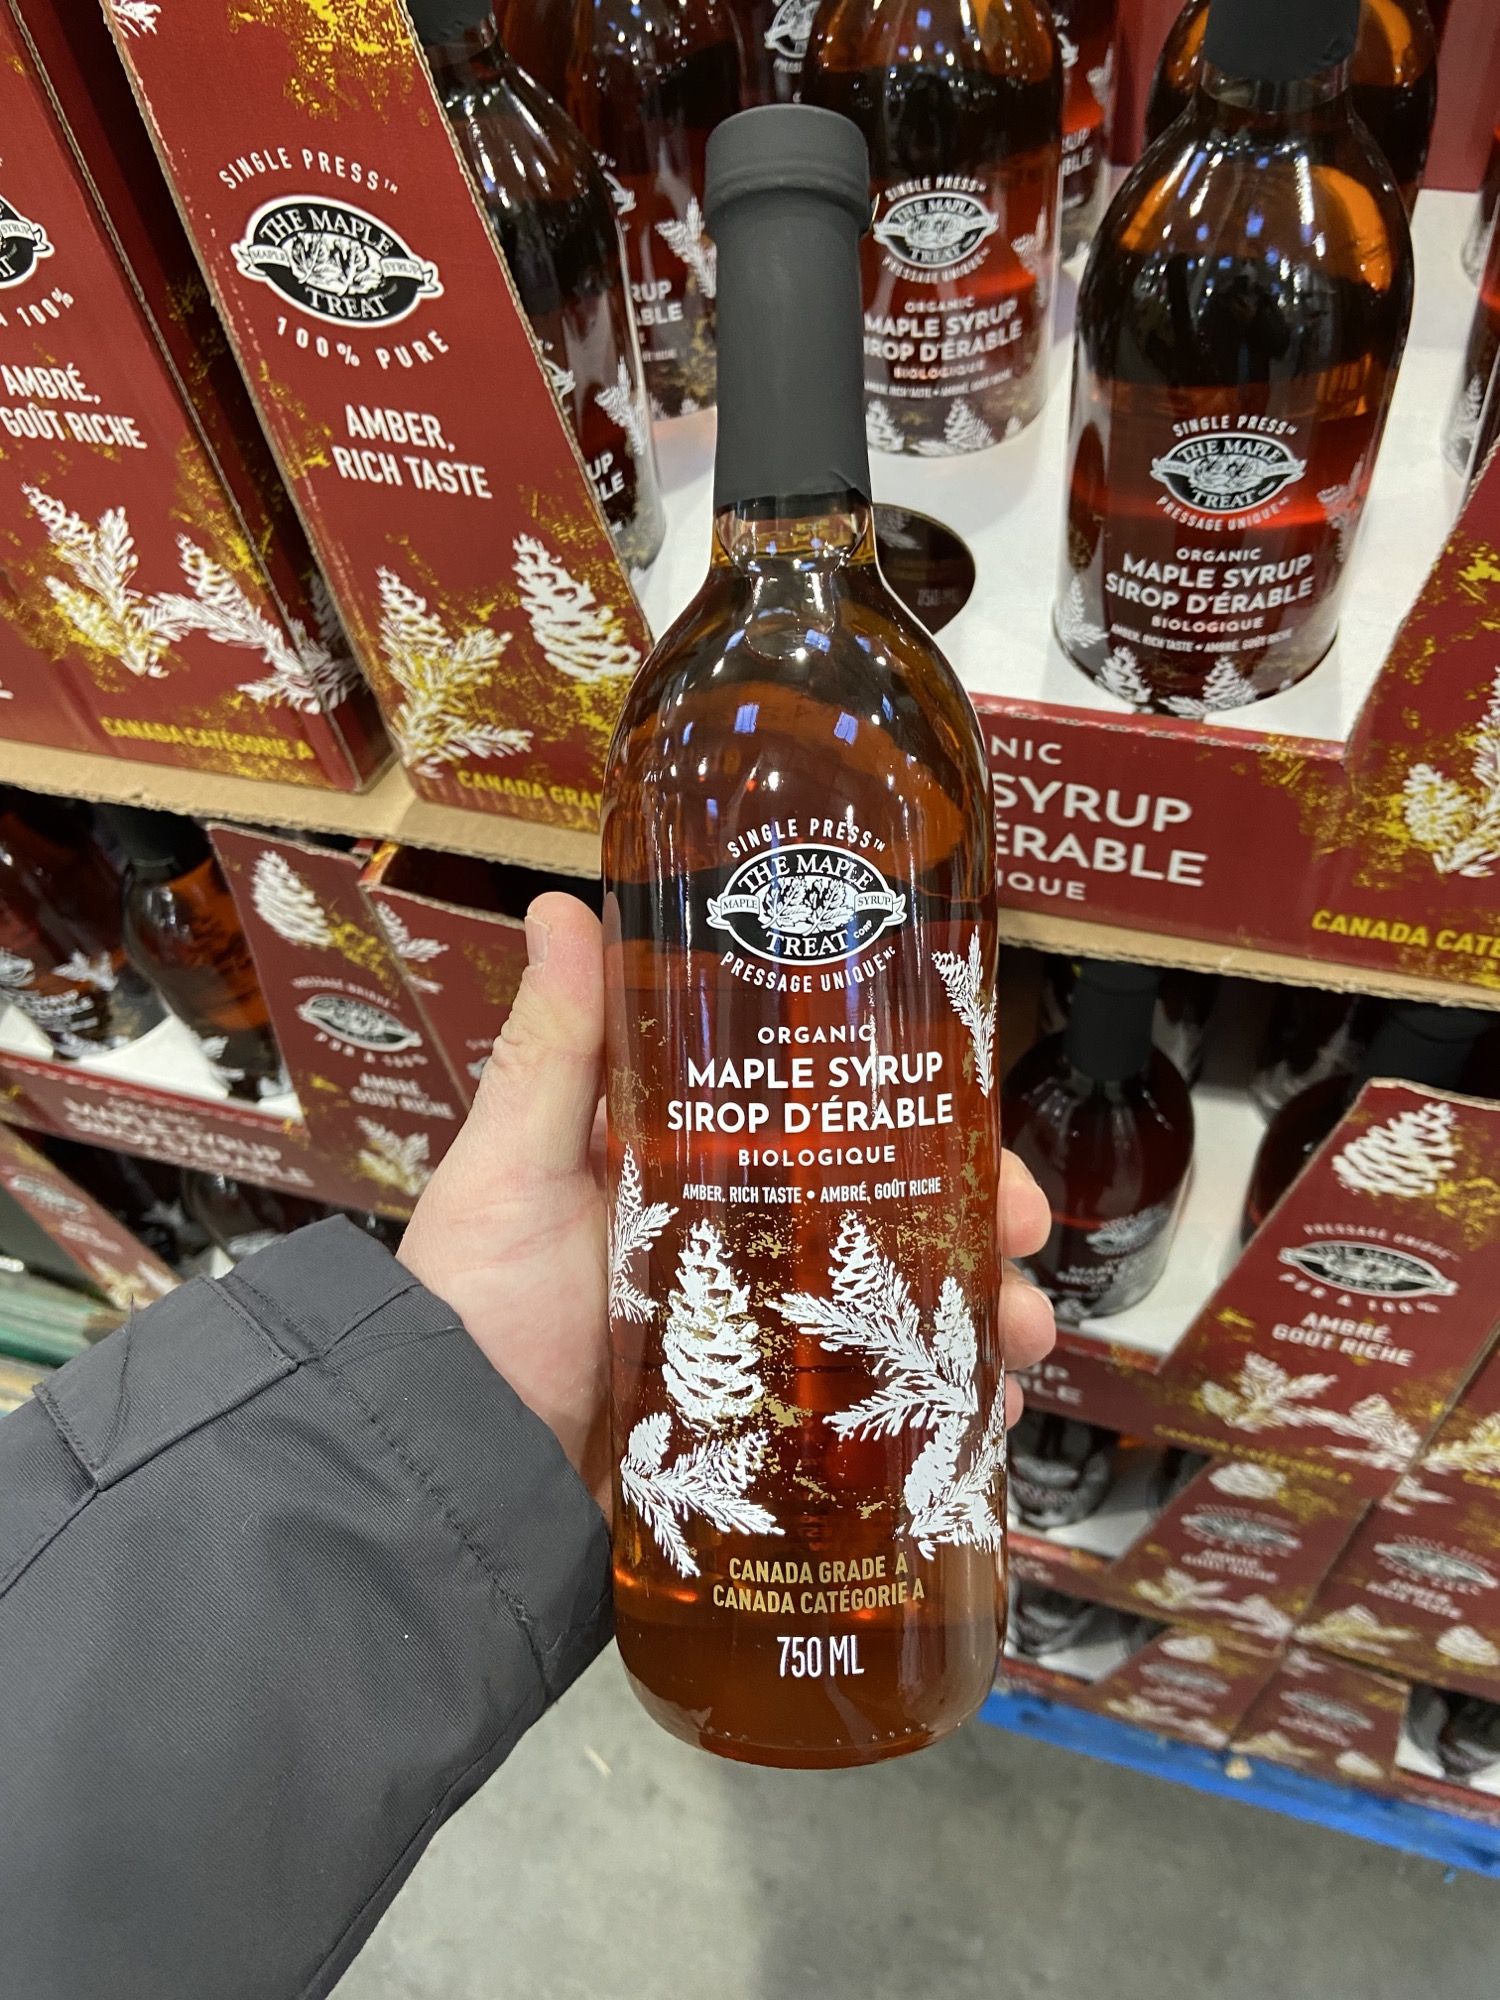 I found some Canadian Wine